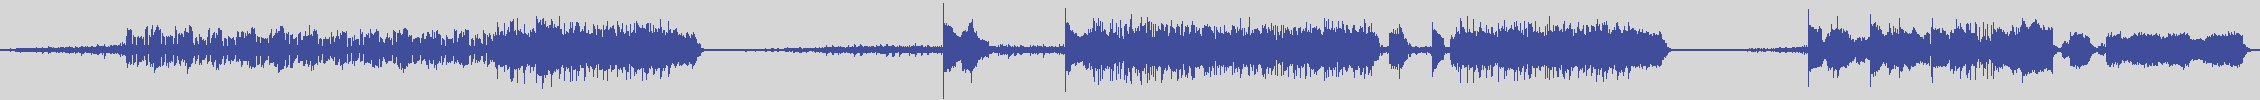 digiphonic_records [DPR010] Bernard Bess, The Fantastic Royal Orchestra - Profondo Rosso [Original Mix] audio wave form